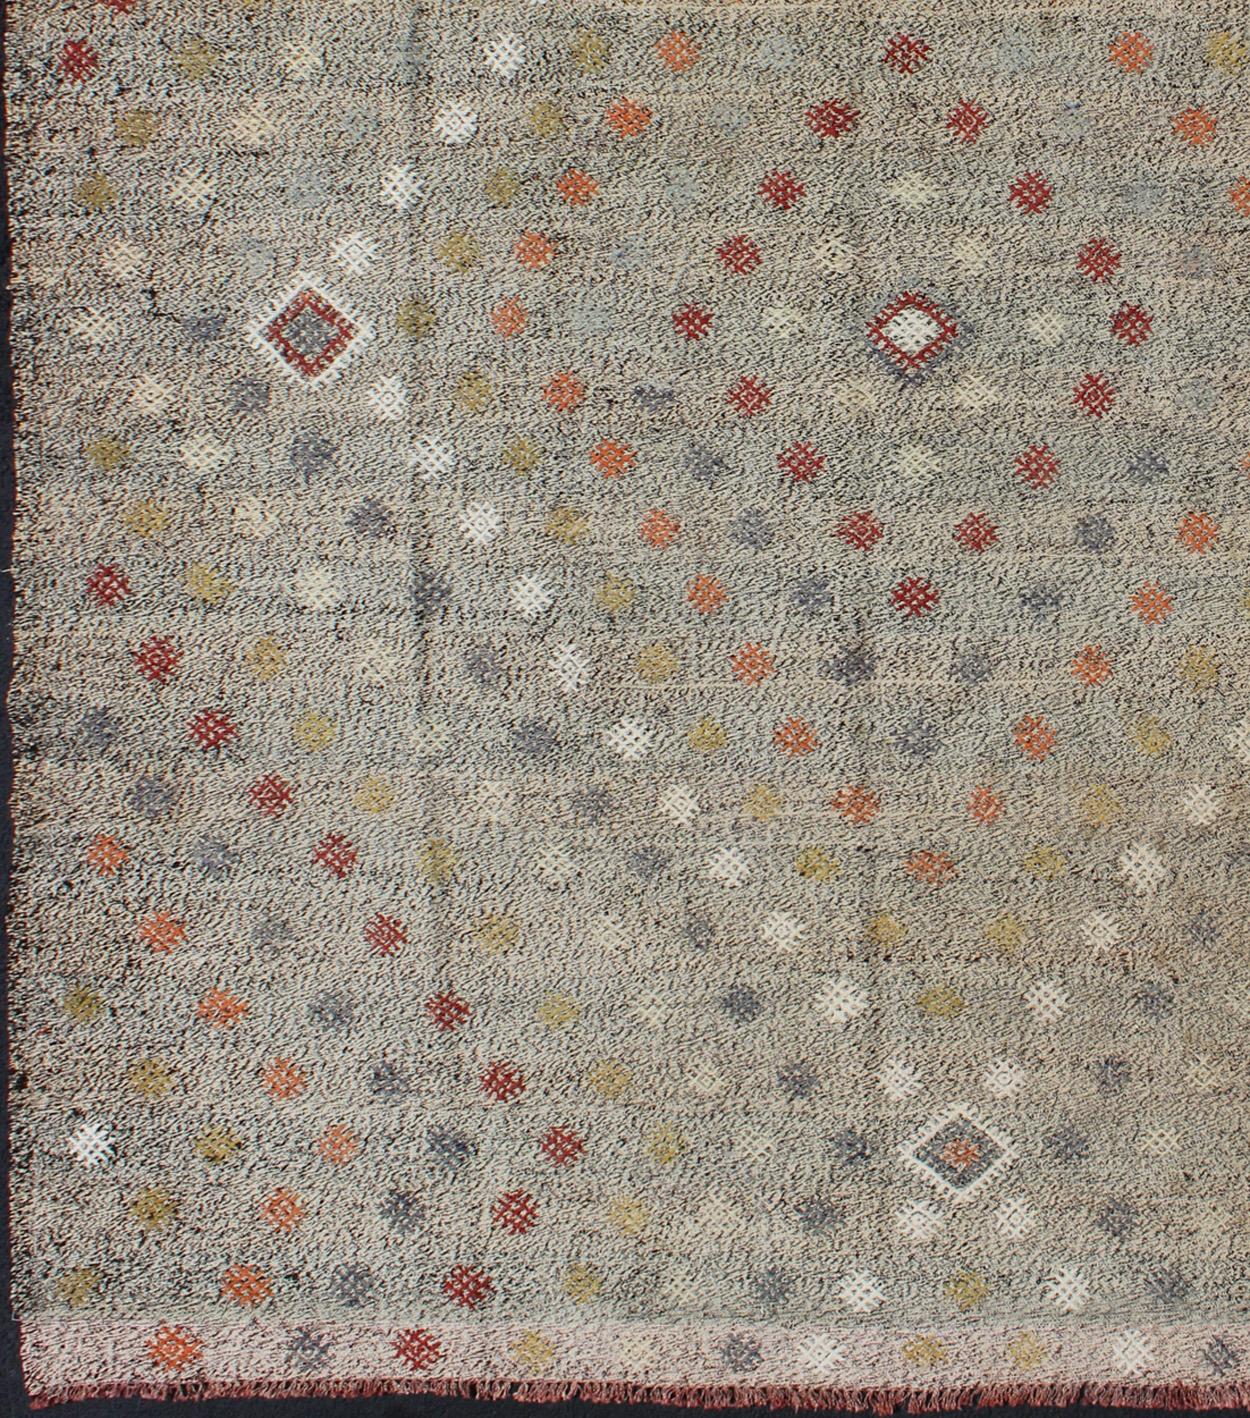 Vintage Turkish Kilim Rug with Tribal multi tiered Diamond Pattern. Turkish Kilim vintage rug with all-over tribal diamond pattern, Keivan Woven Arts/ rug/ TU-EMD-136527, country of origin / type: Turkey / Kilim, circa mid-20th century

Measures: